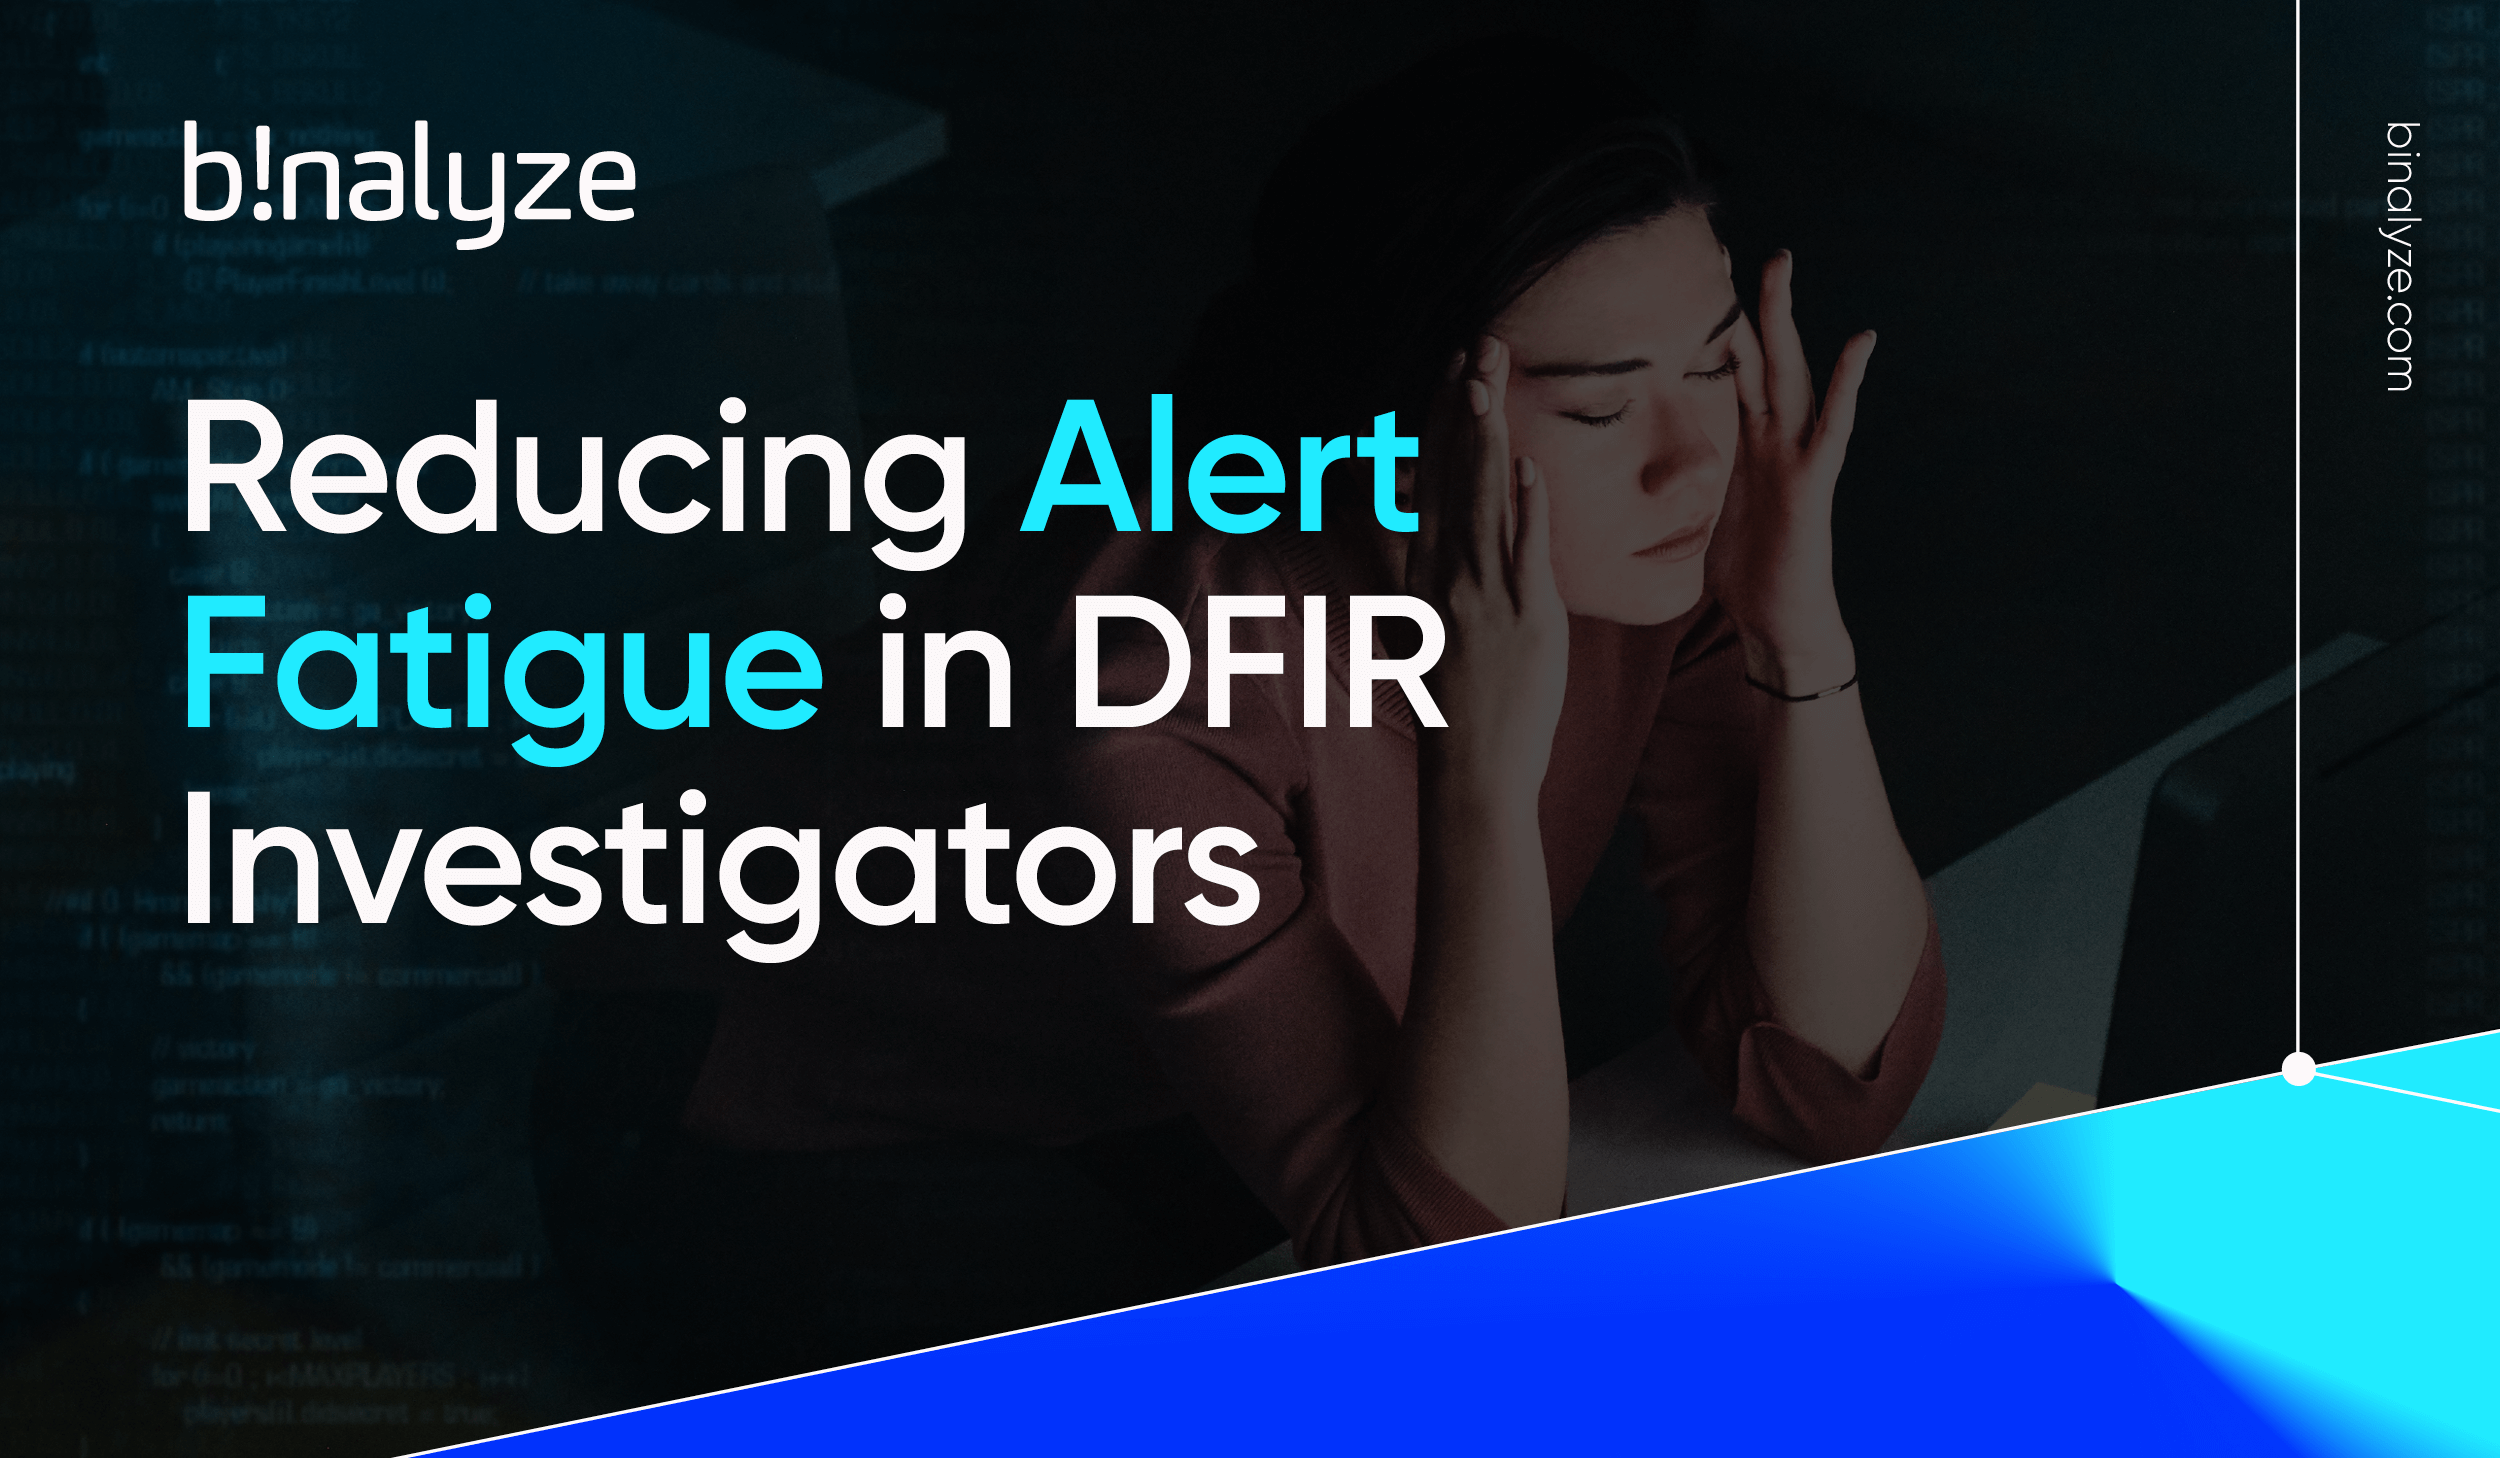 Reducing Alert Fatigue in DFIR Investigators with Binalyze AIR